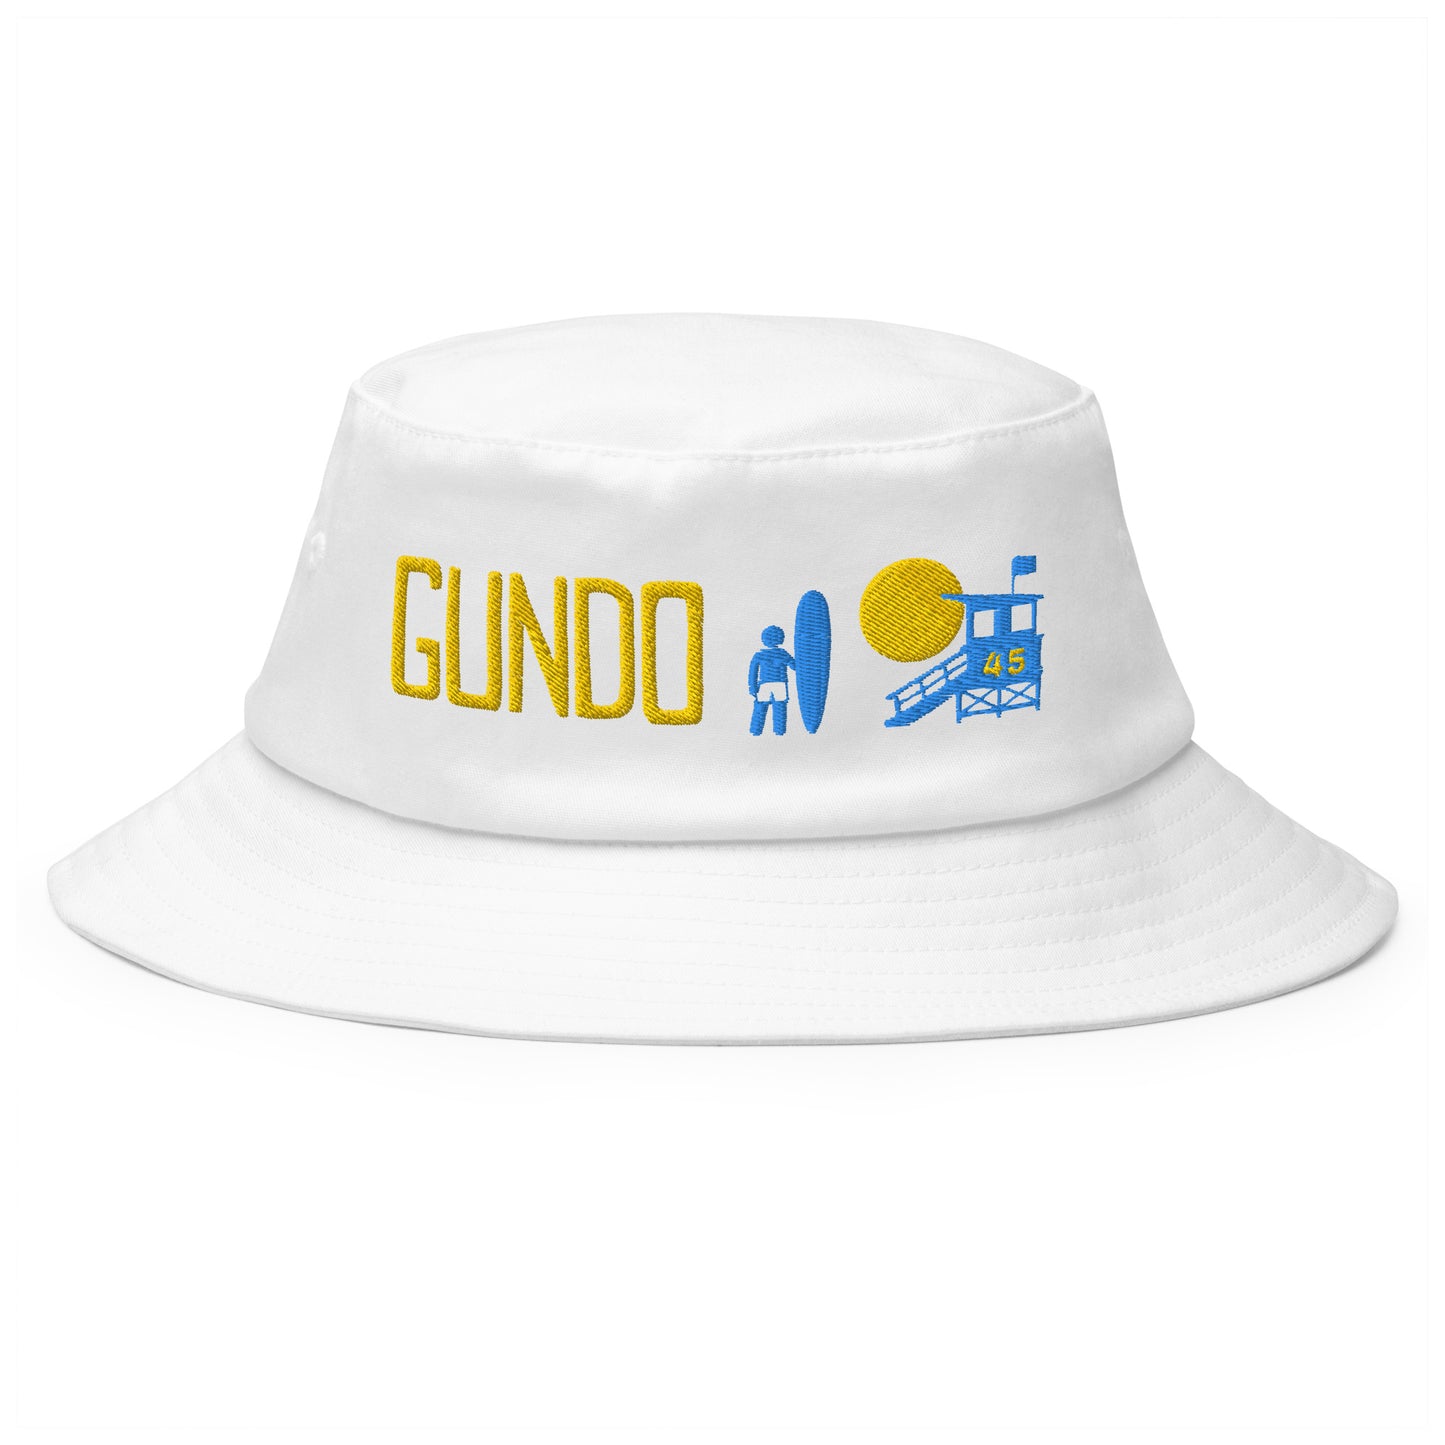 GUNDO Tower 45 Surfer El Segundo Old School Bucket Hat